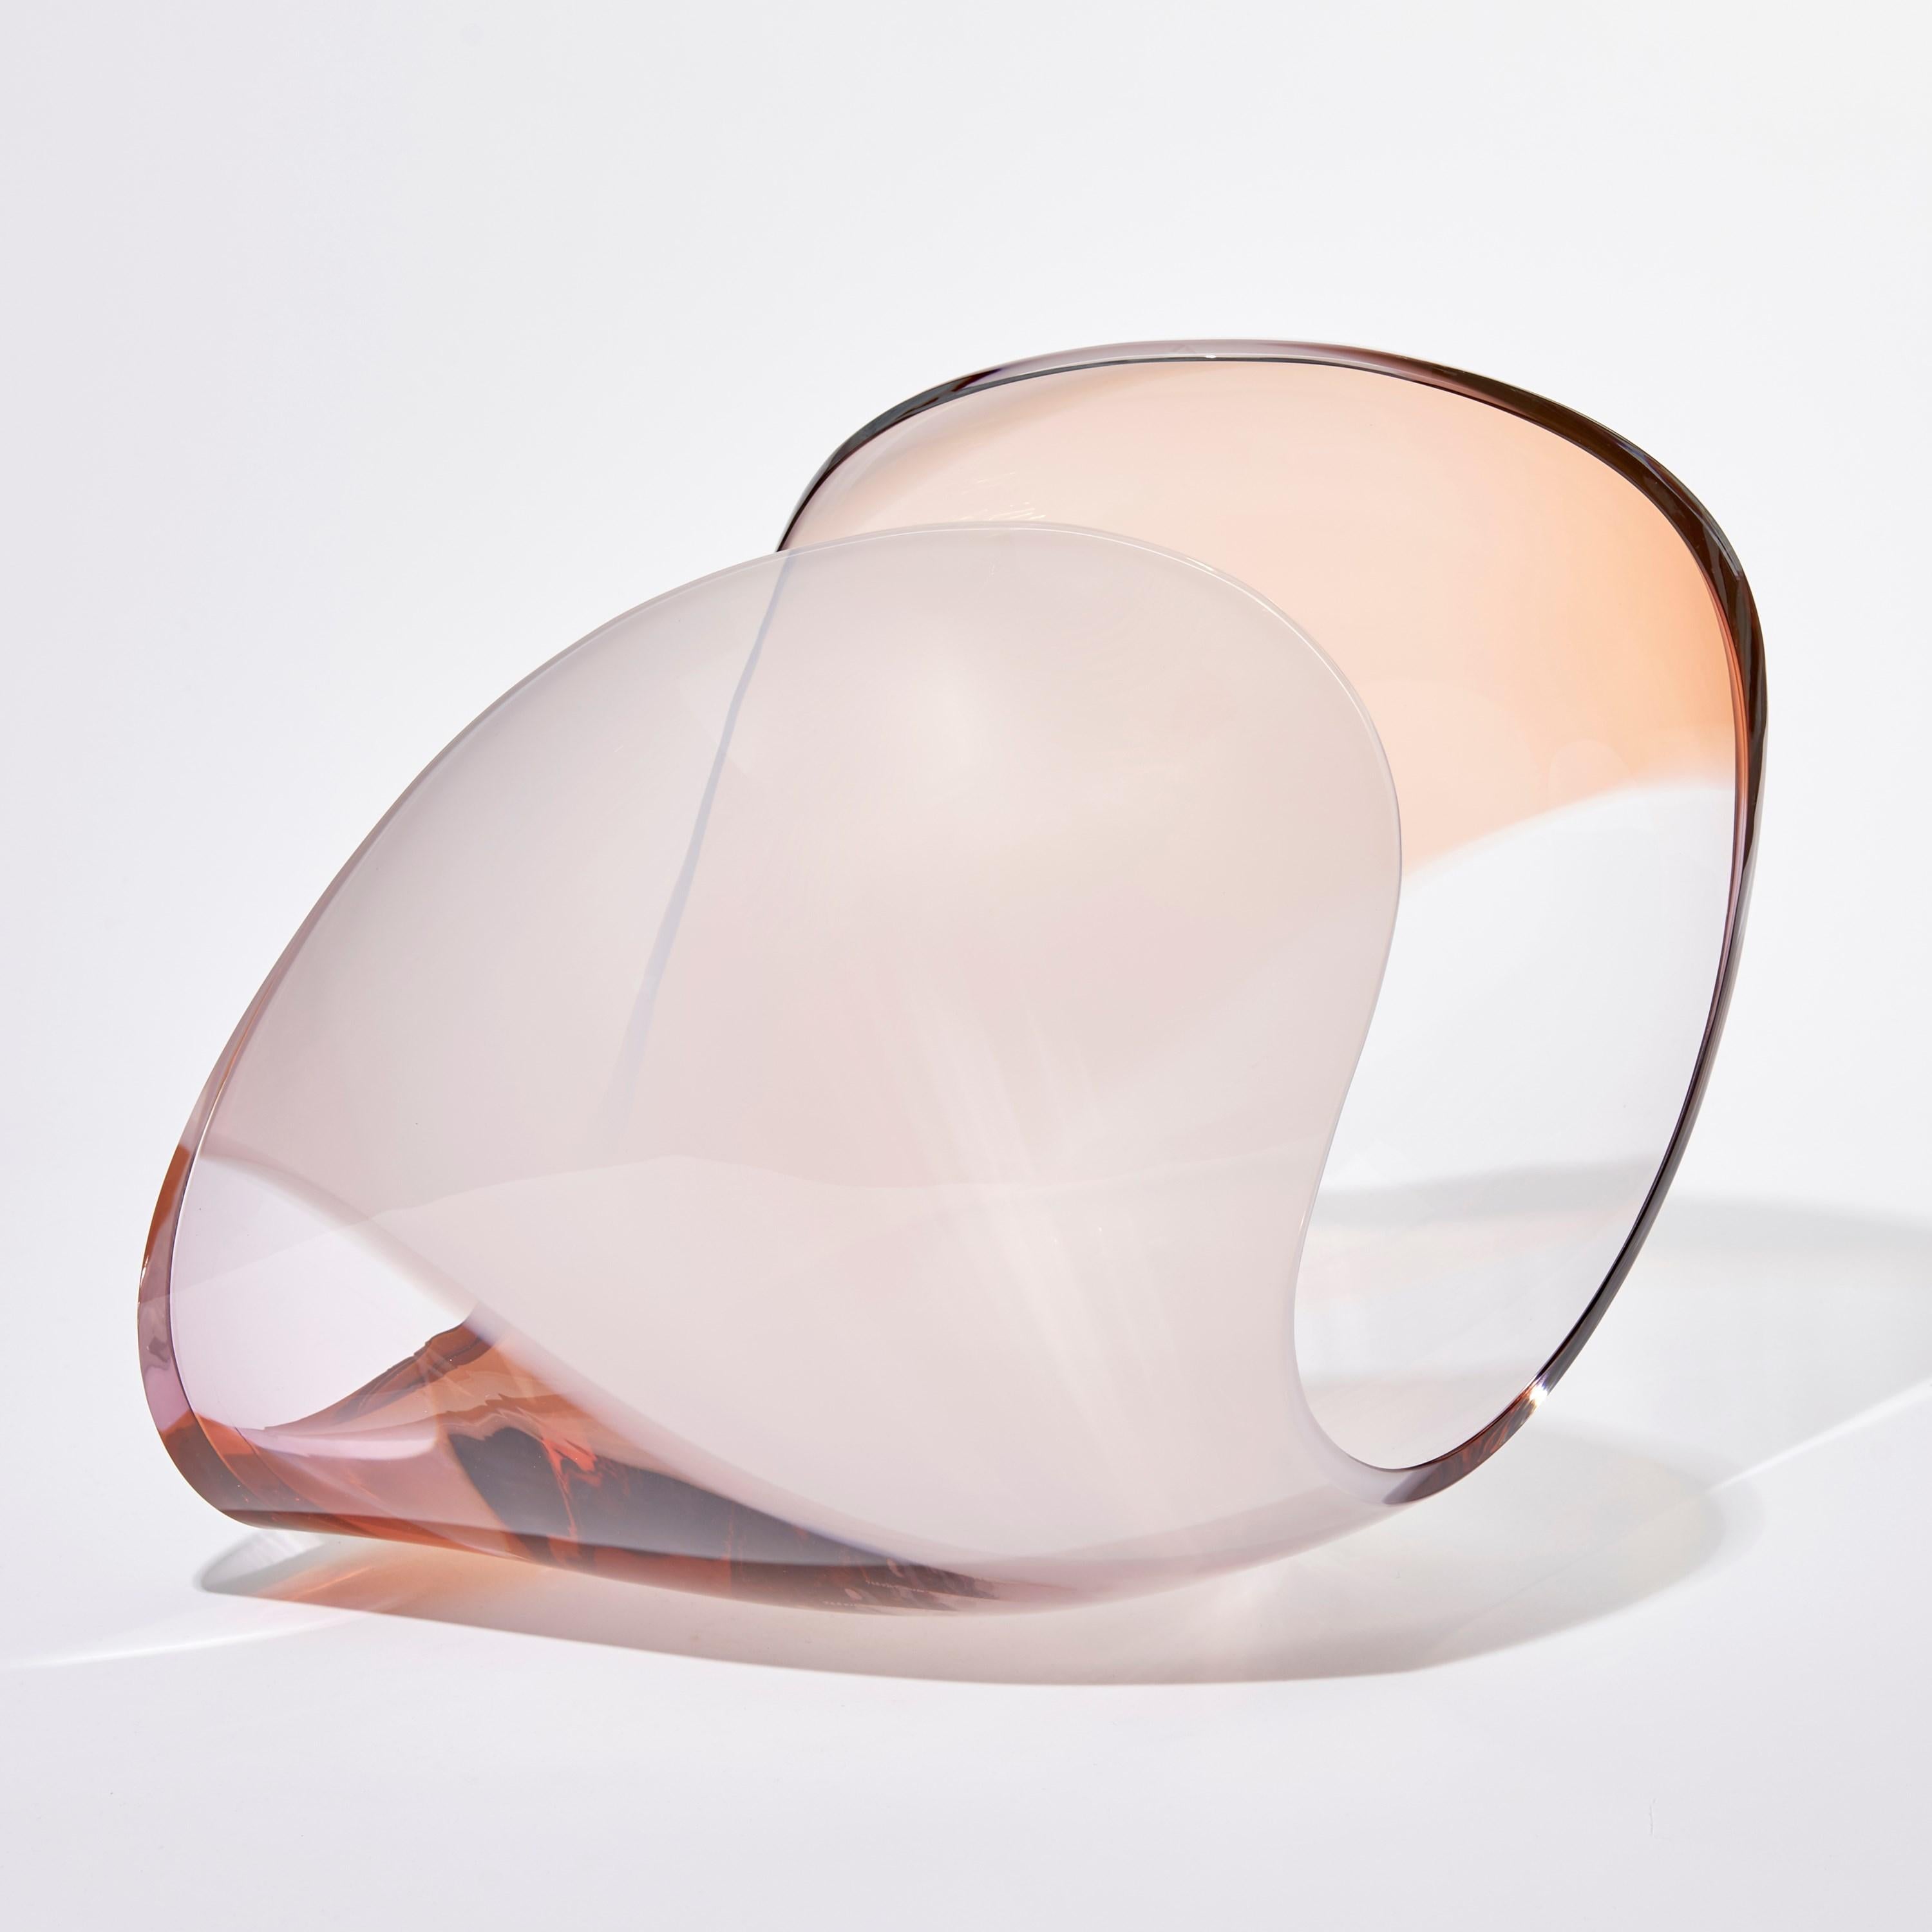 Organic Modern Planet in Amber & Pink a Unique Glass Sculpture & Centrepiece by Lena Bergström